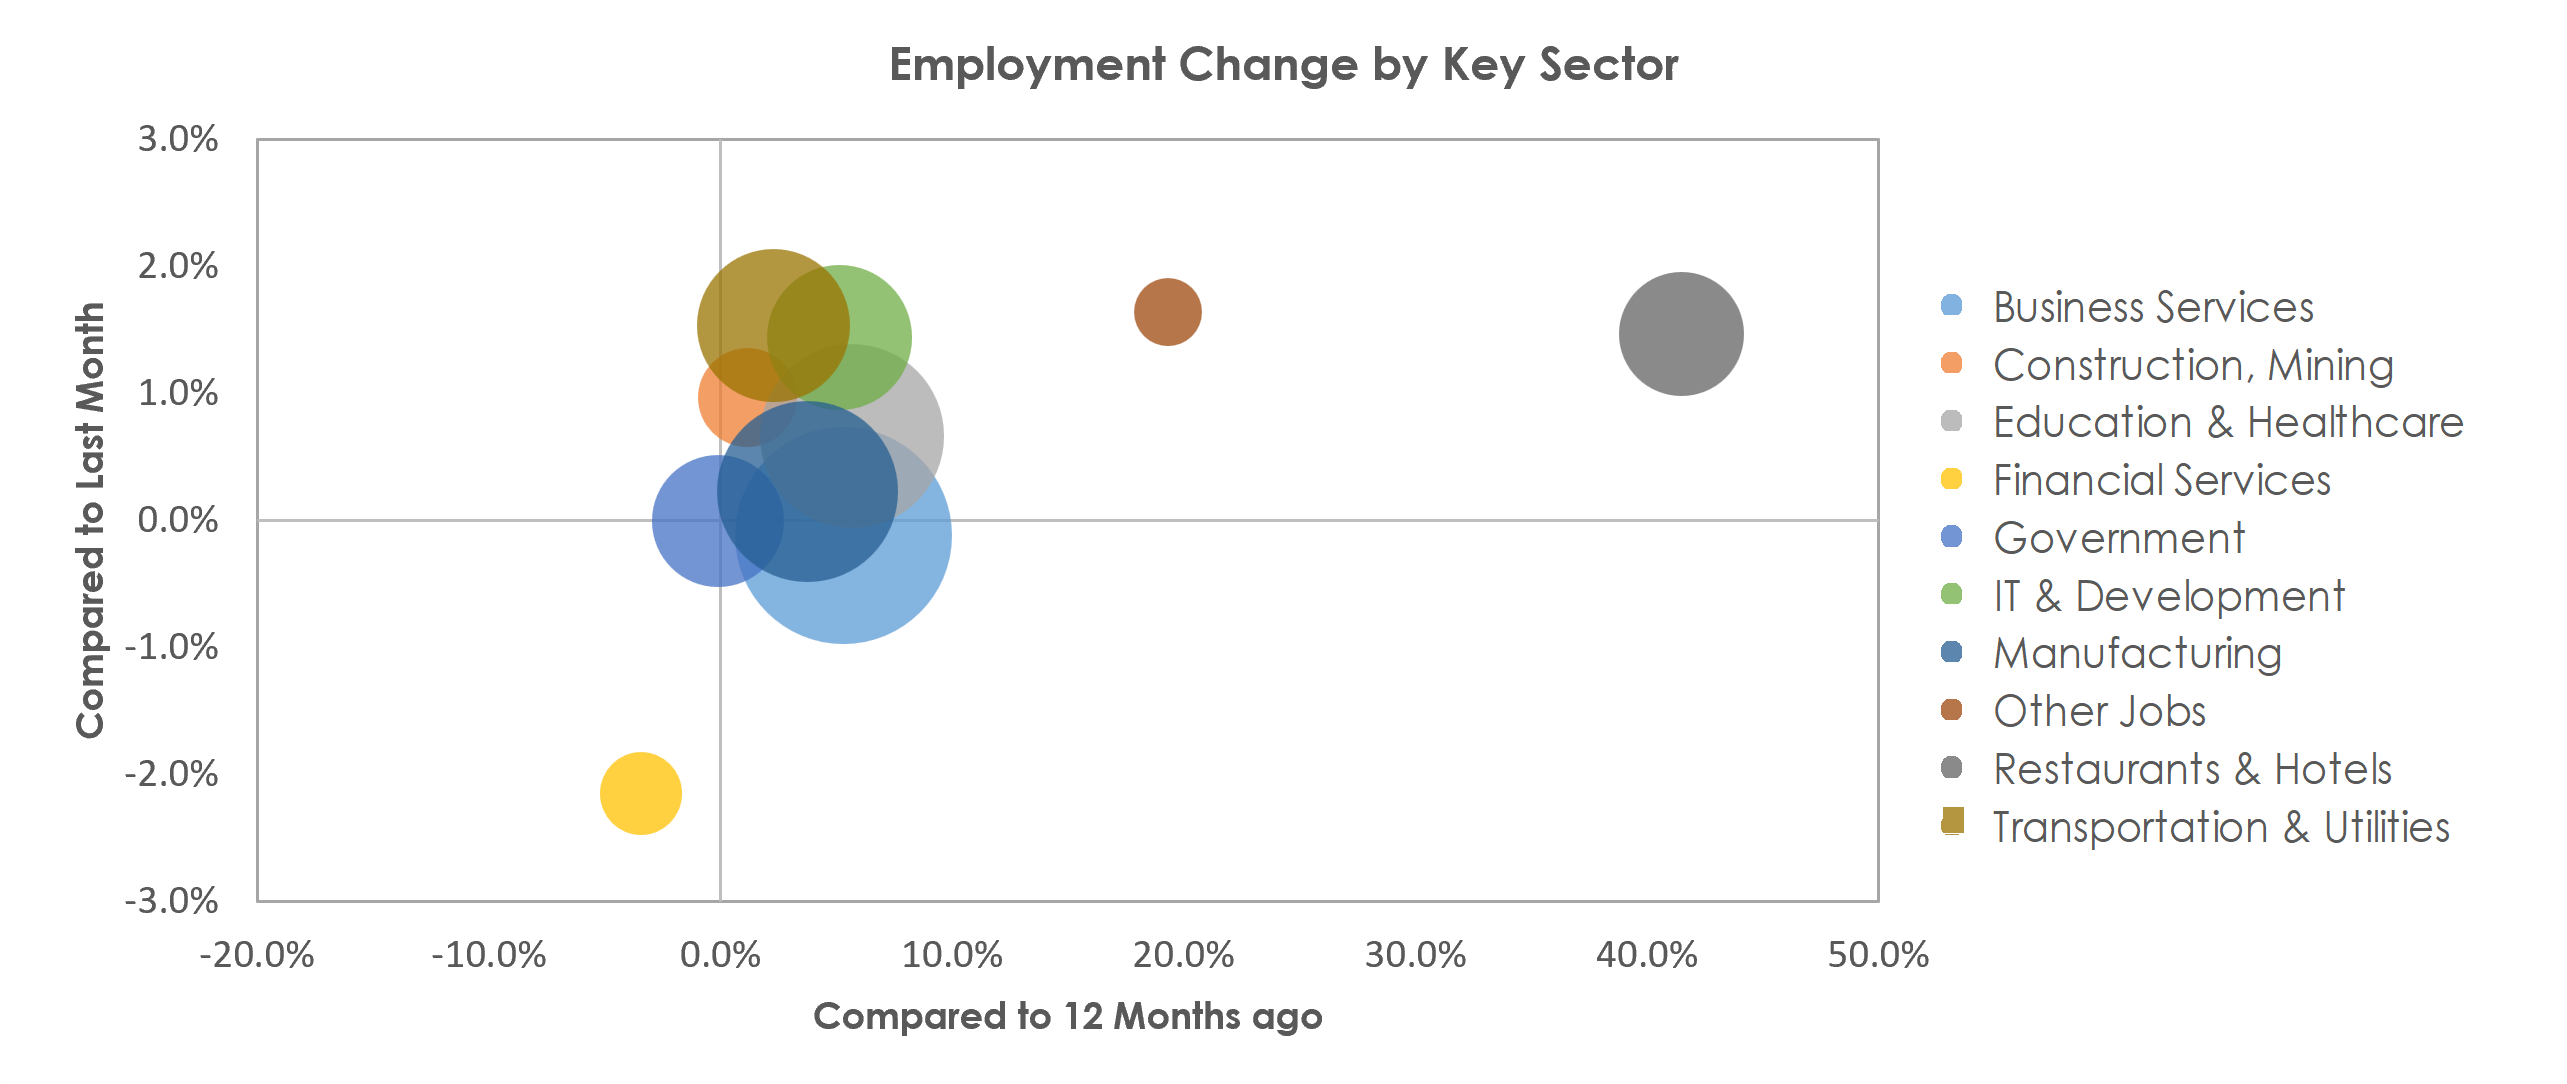 San Jose-Sunnyvale-Santa Clara, CA Unemployment by Industry December 2021